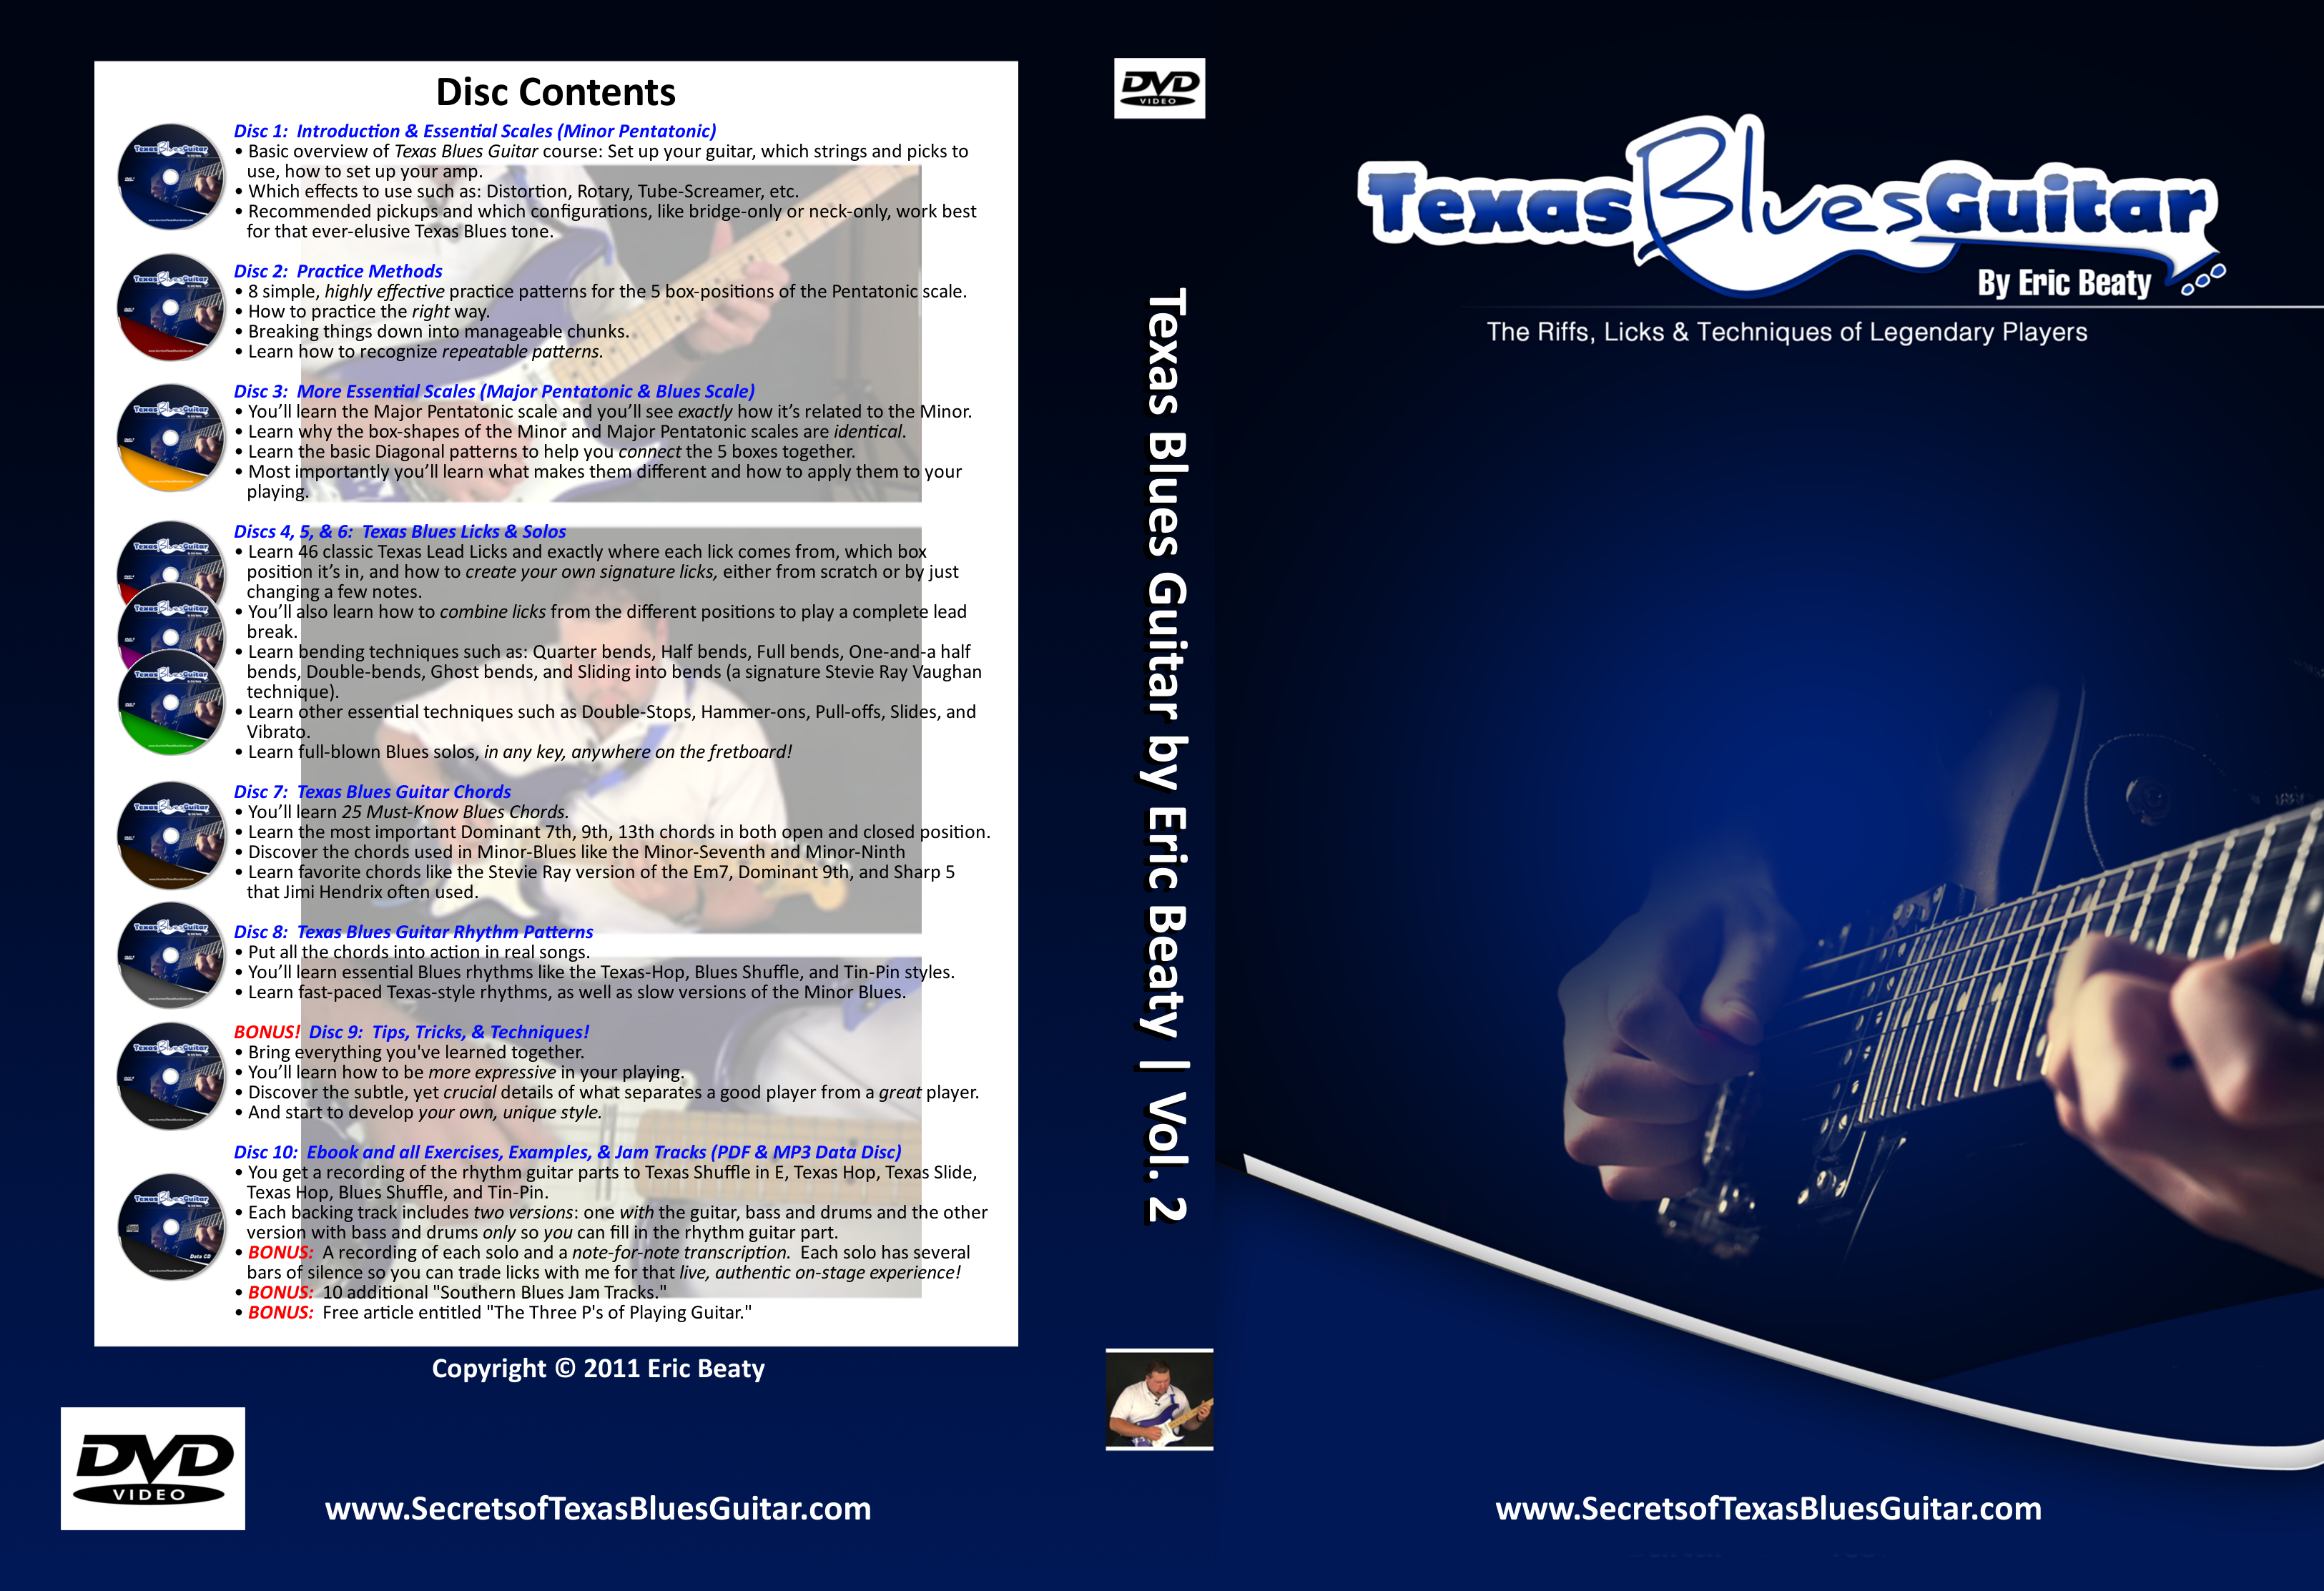 Texas Blues Guitar TrepStar DVD Cover Wrap - Vol. 2